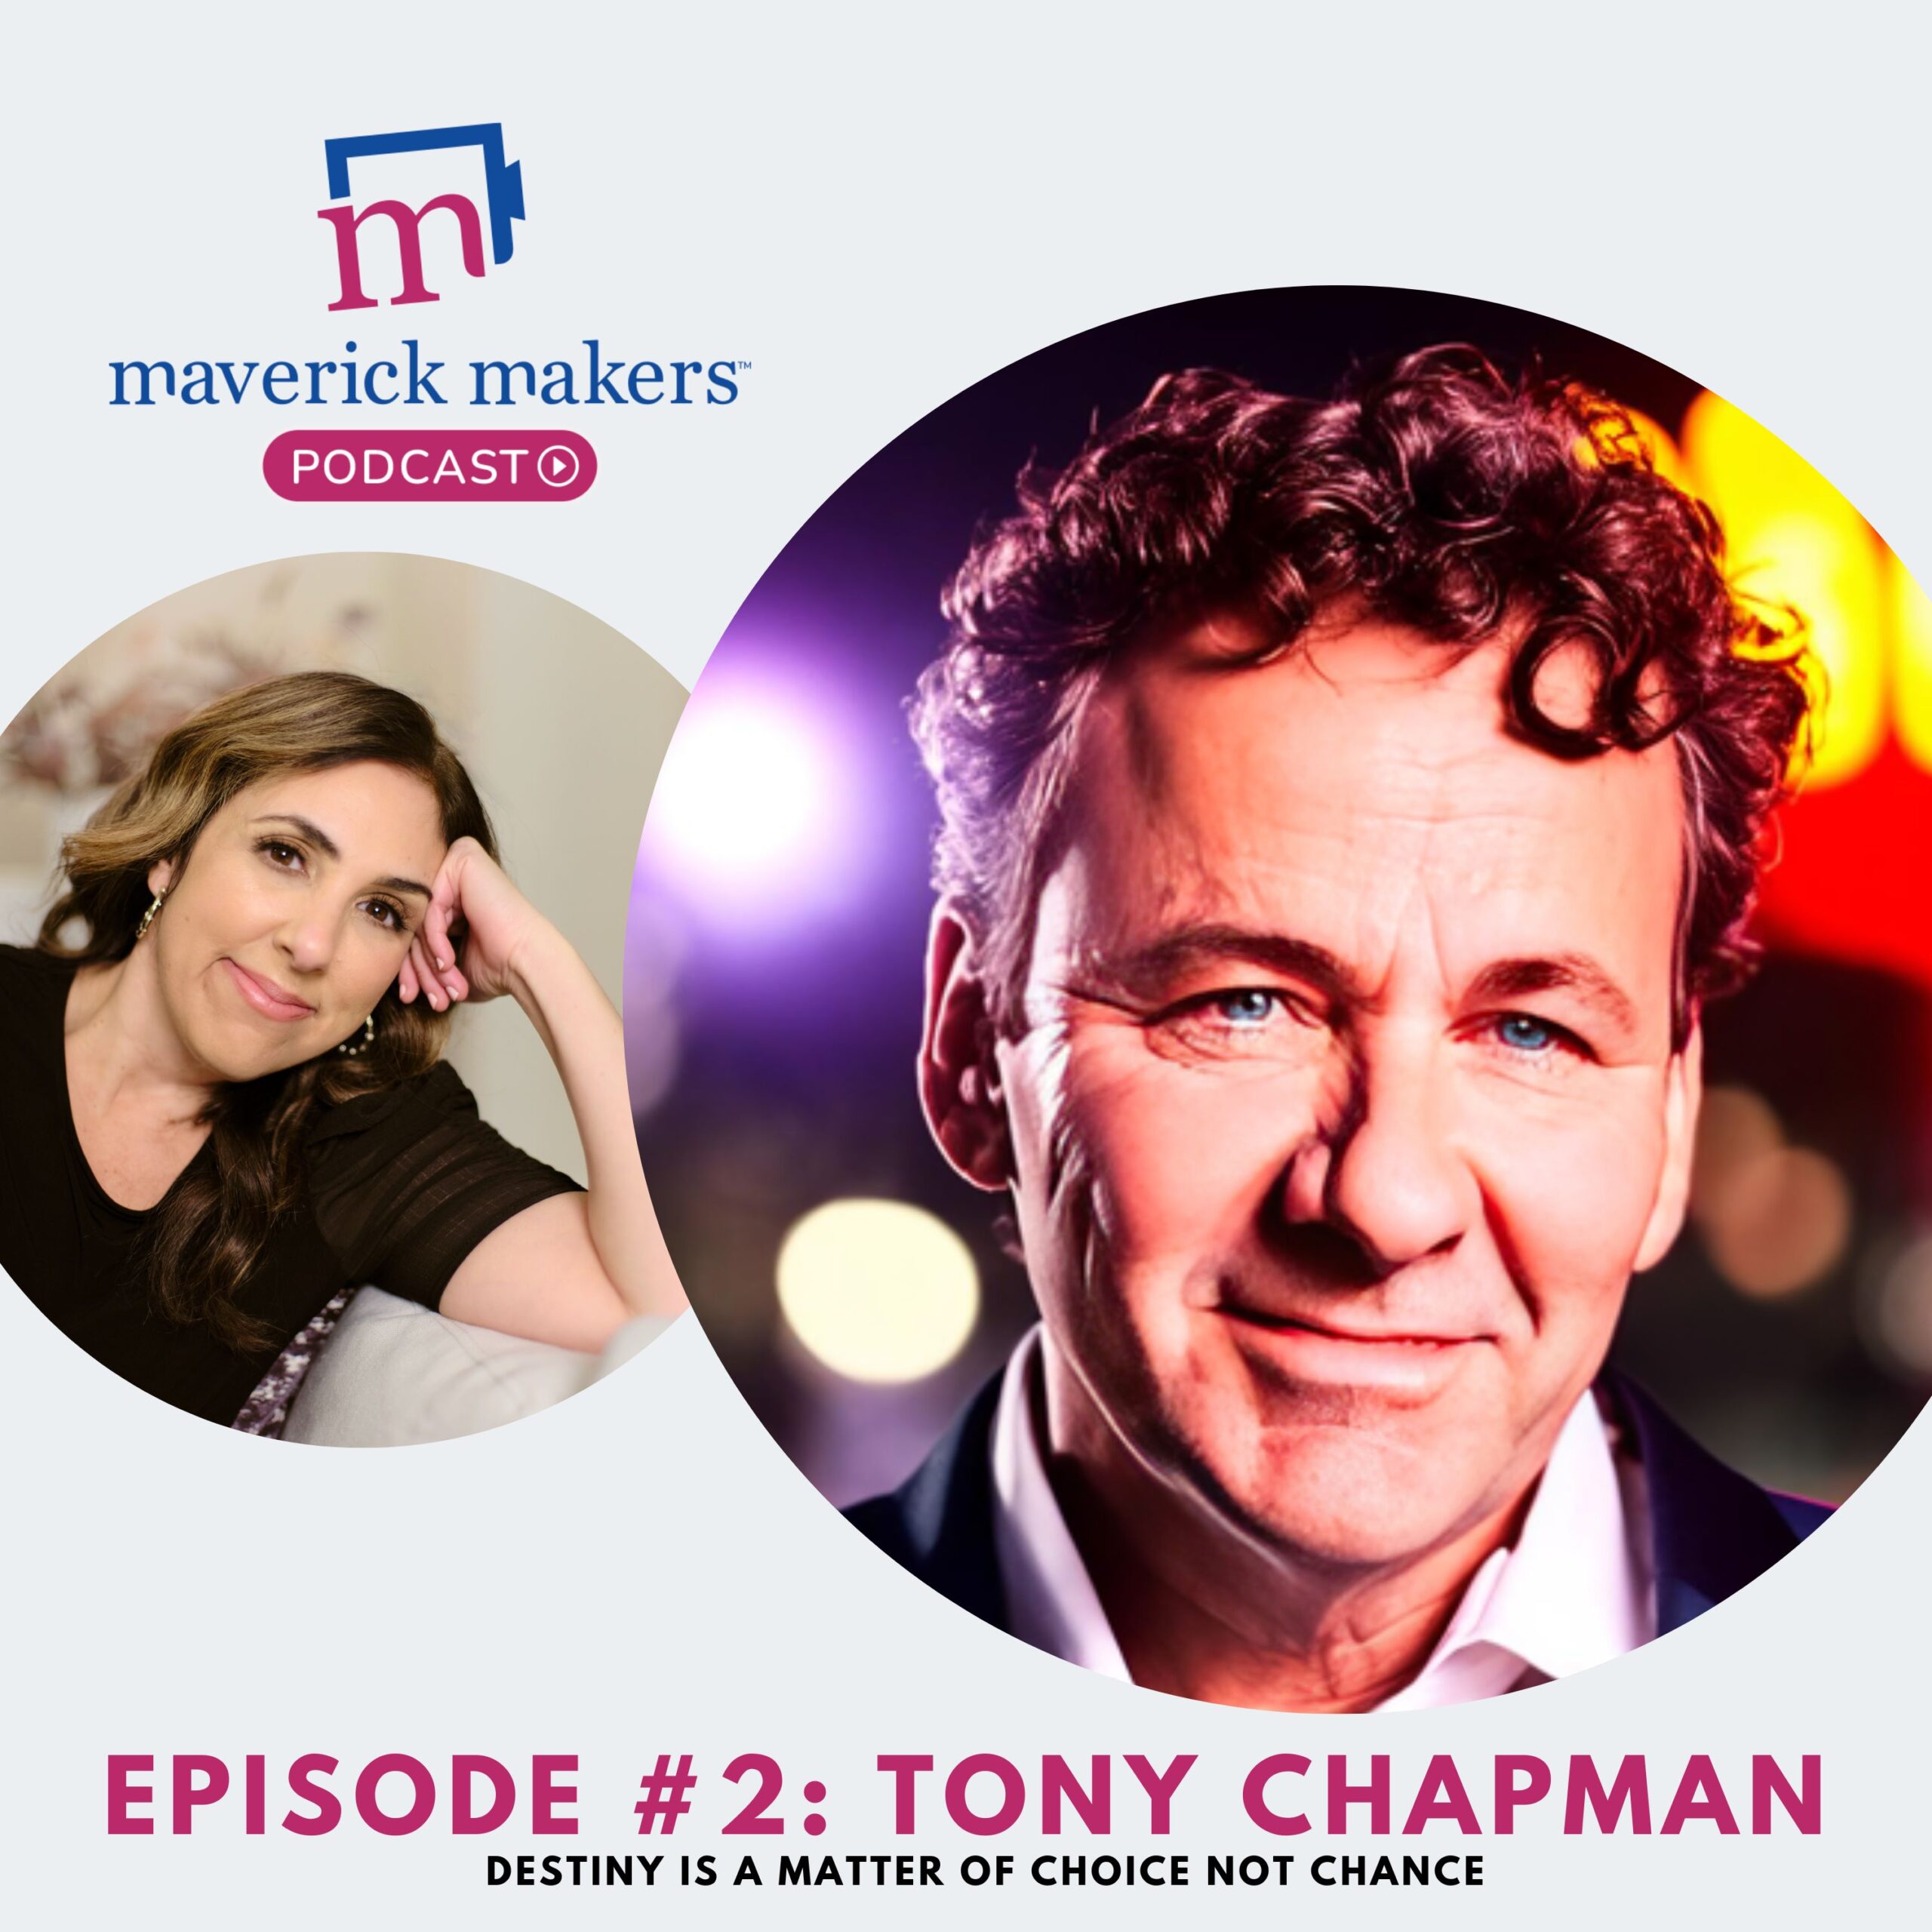 Tony Chapman: Destiny is a Matter of Choice Not Chance